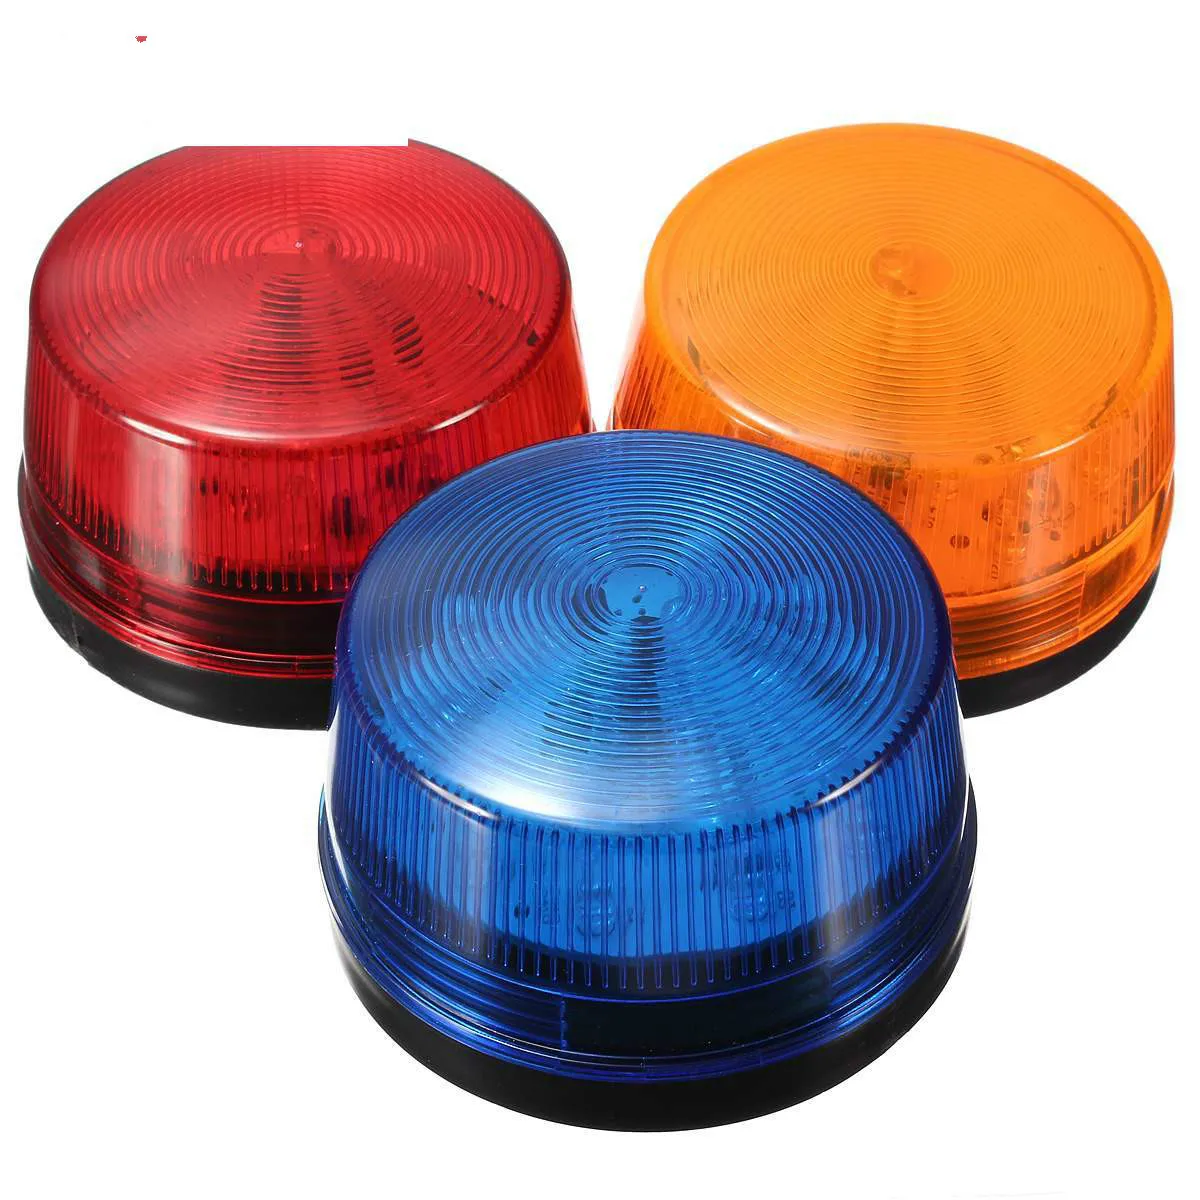 

High Quality Waterproof 12V 120mA Safely Security Alarm Strobe Signal Safety Warning Blue Red Orange Flashing LED Light